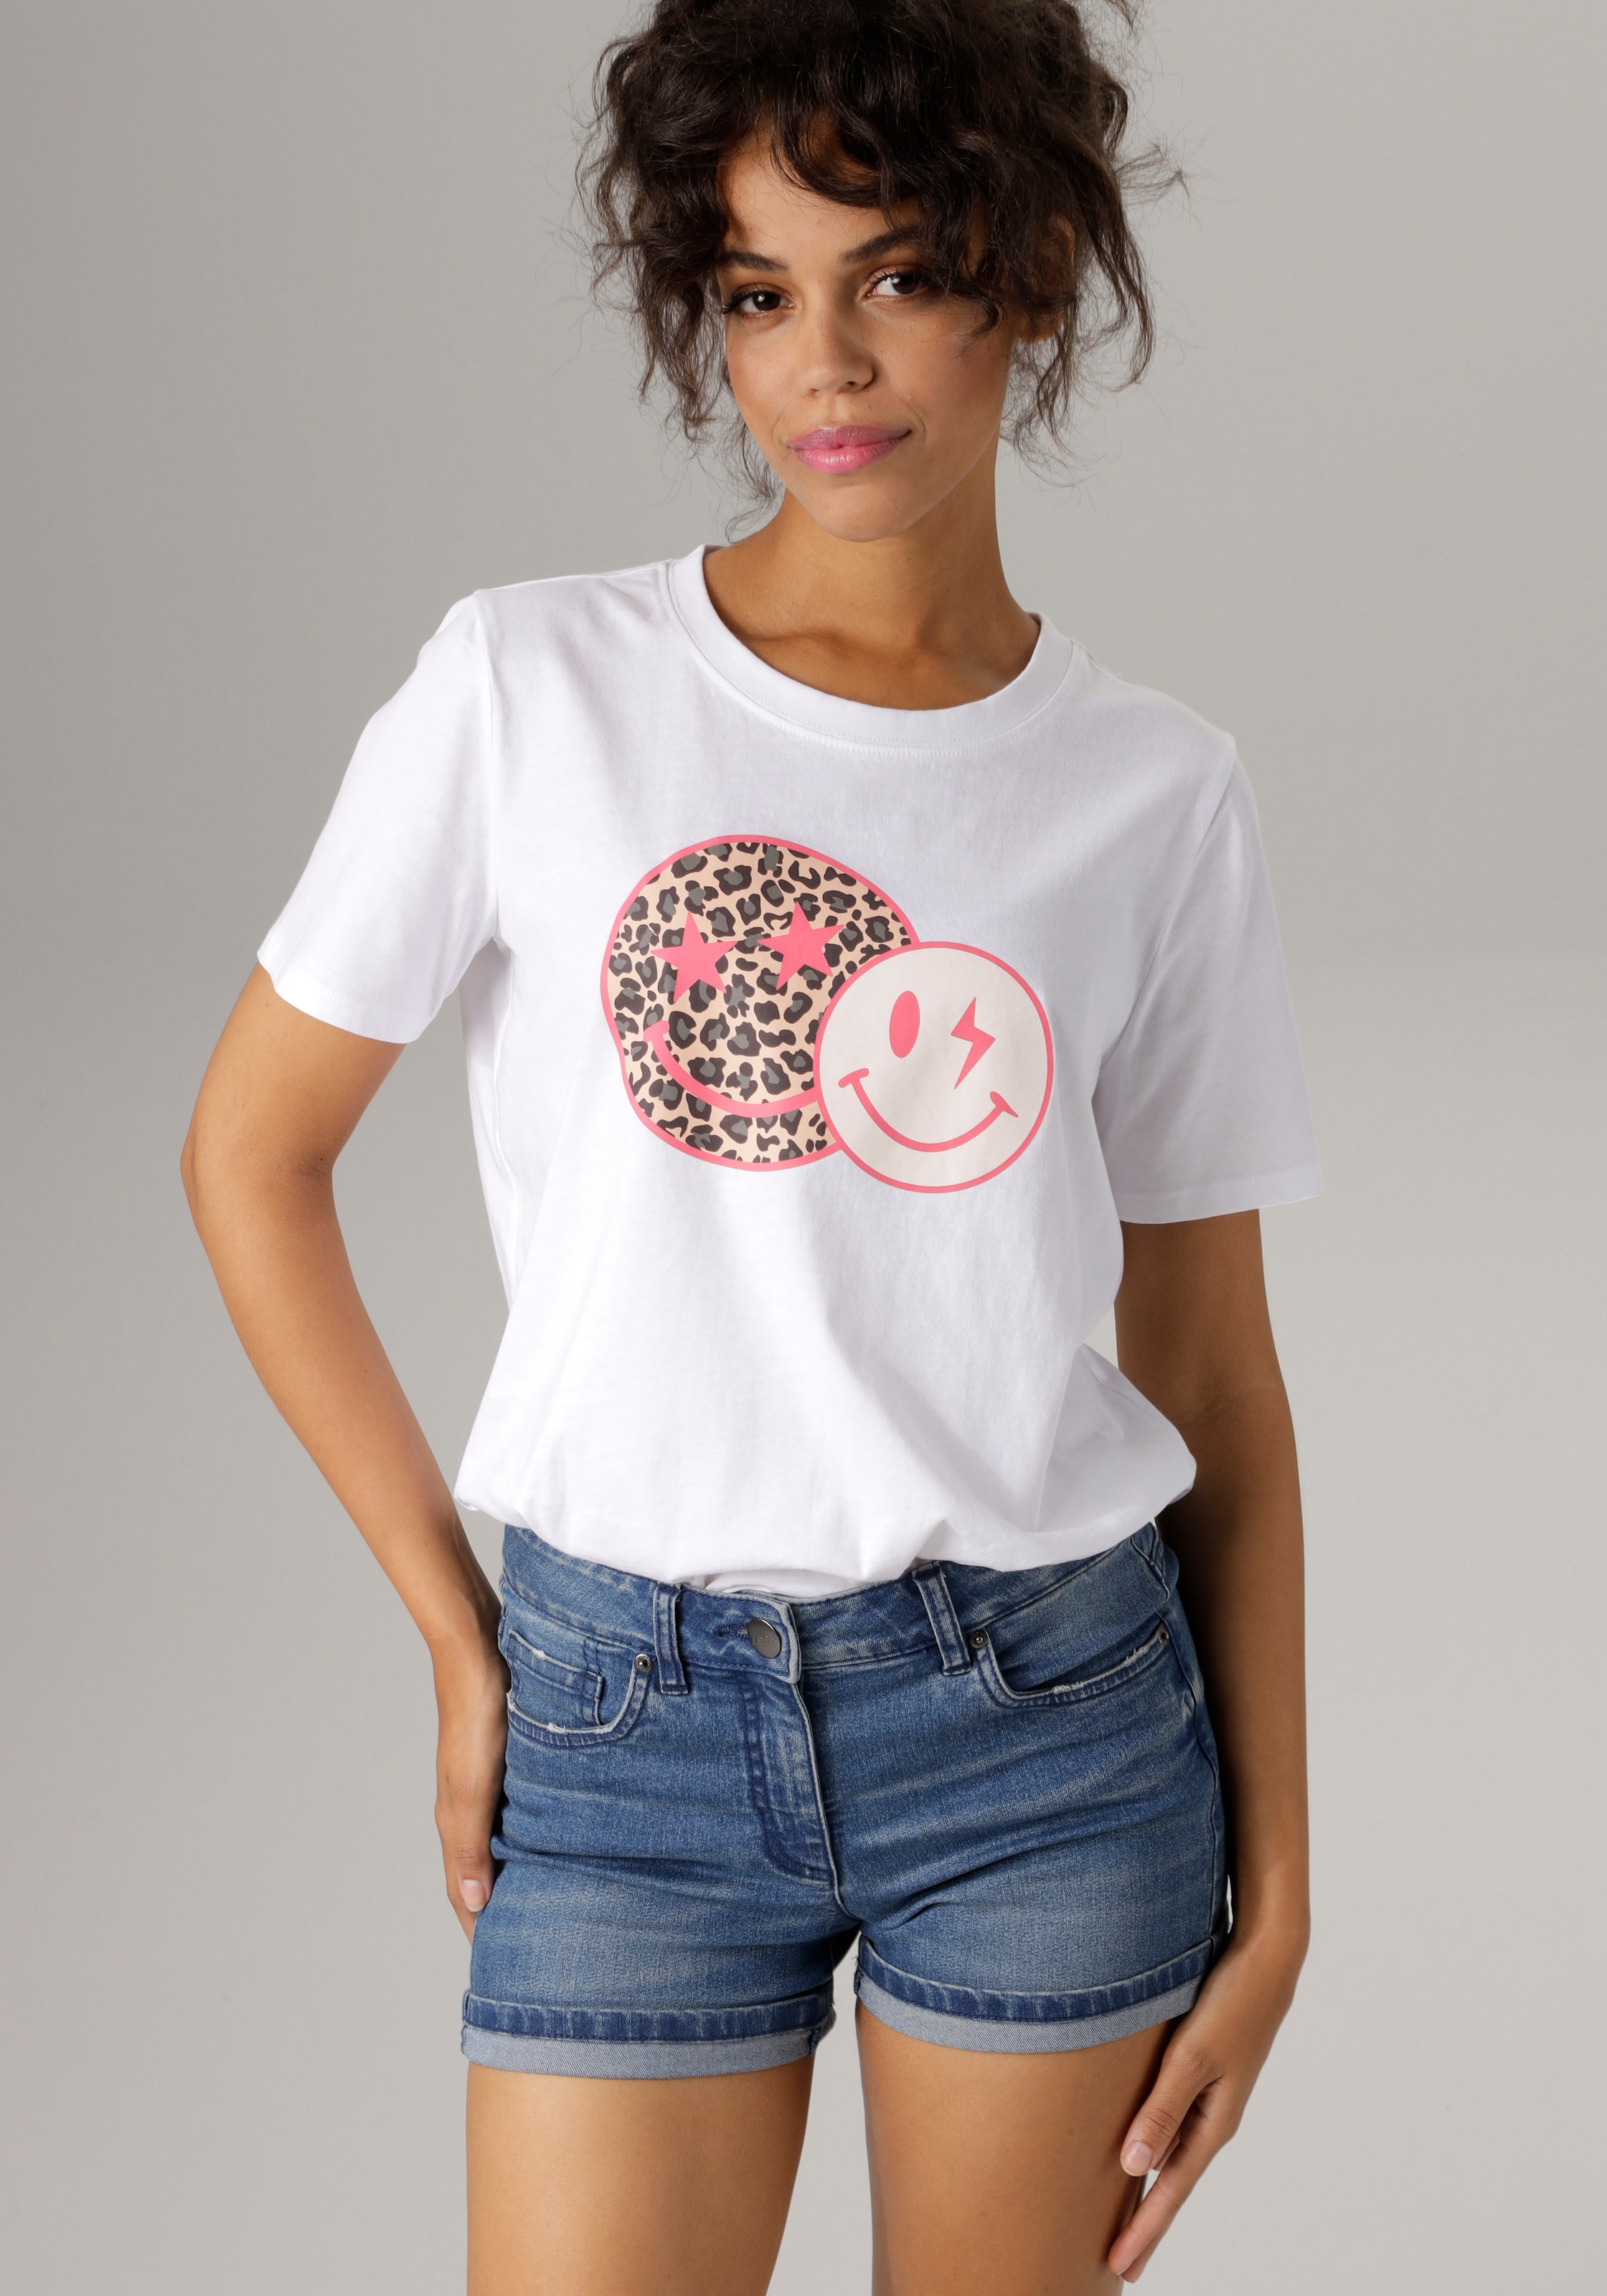 CASUAL mit Smileys coolen bedruckt T-Shirt, Aniston bei ♕